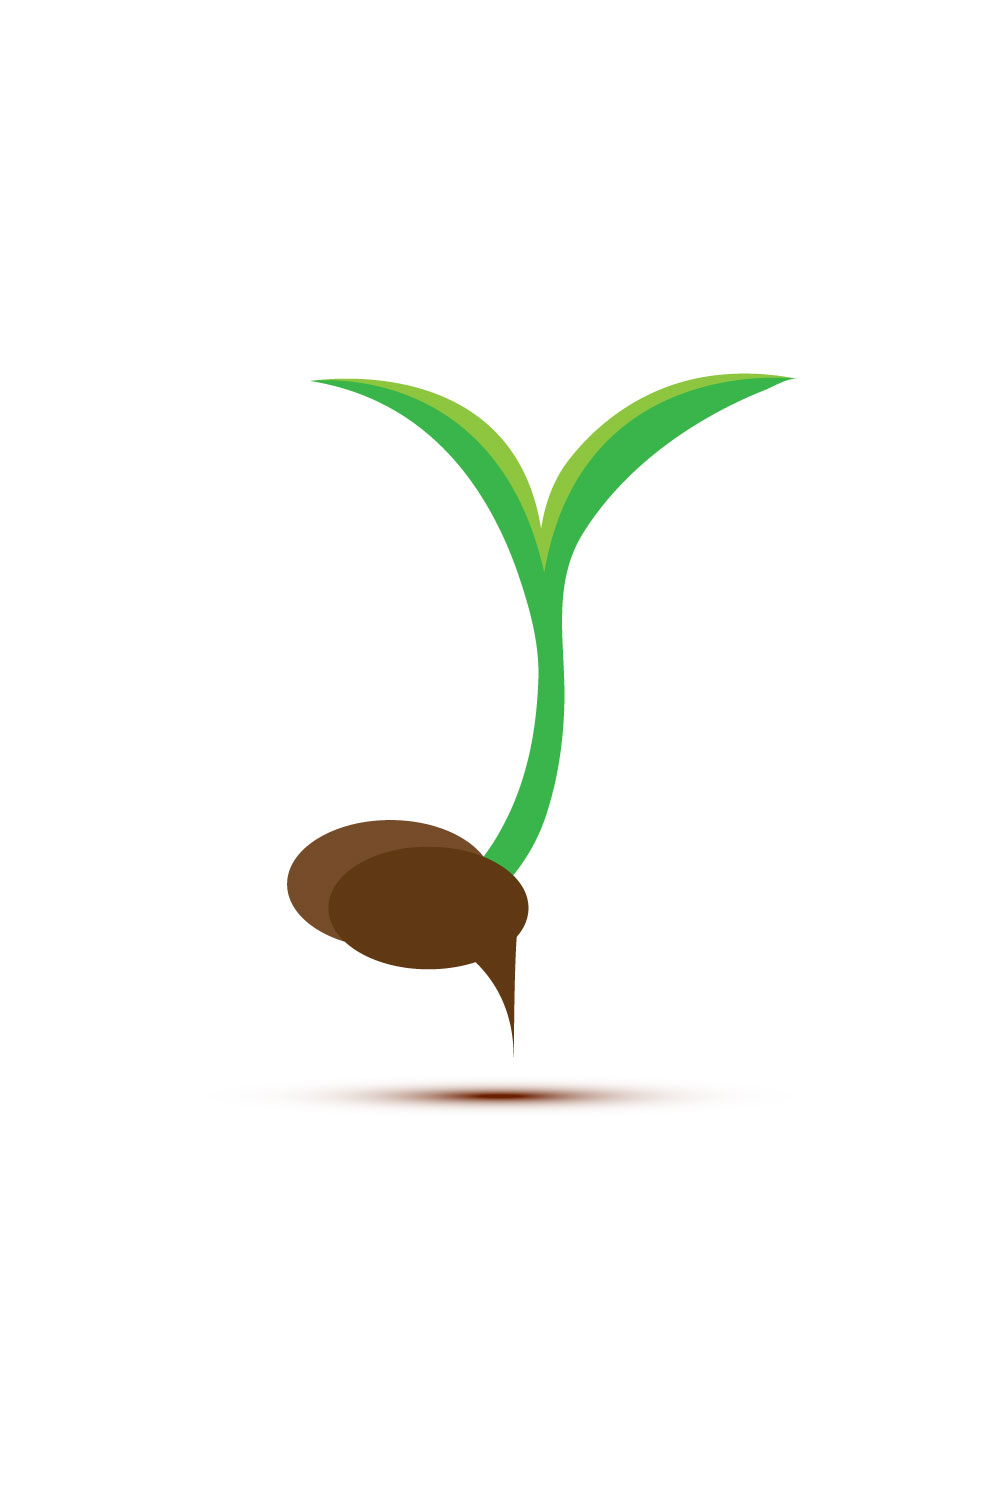 Simple Green Plant Logo Design pinterest image.